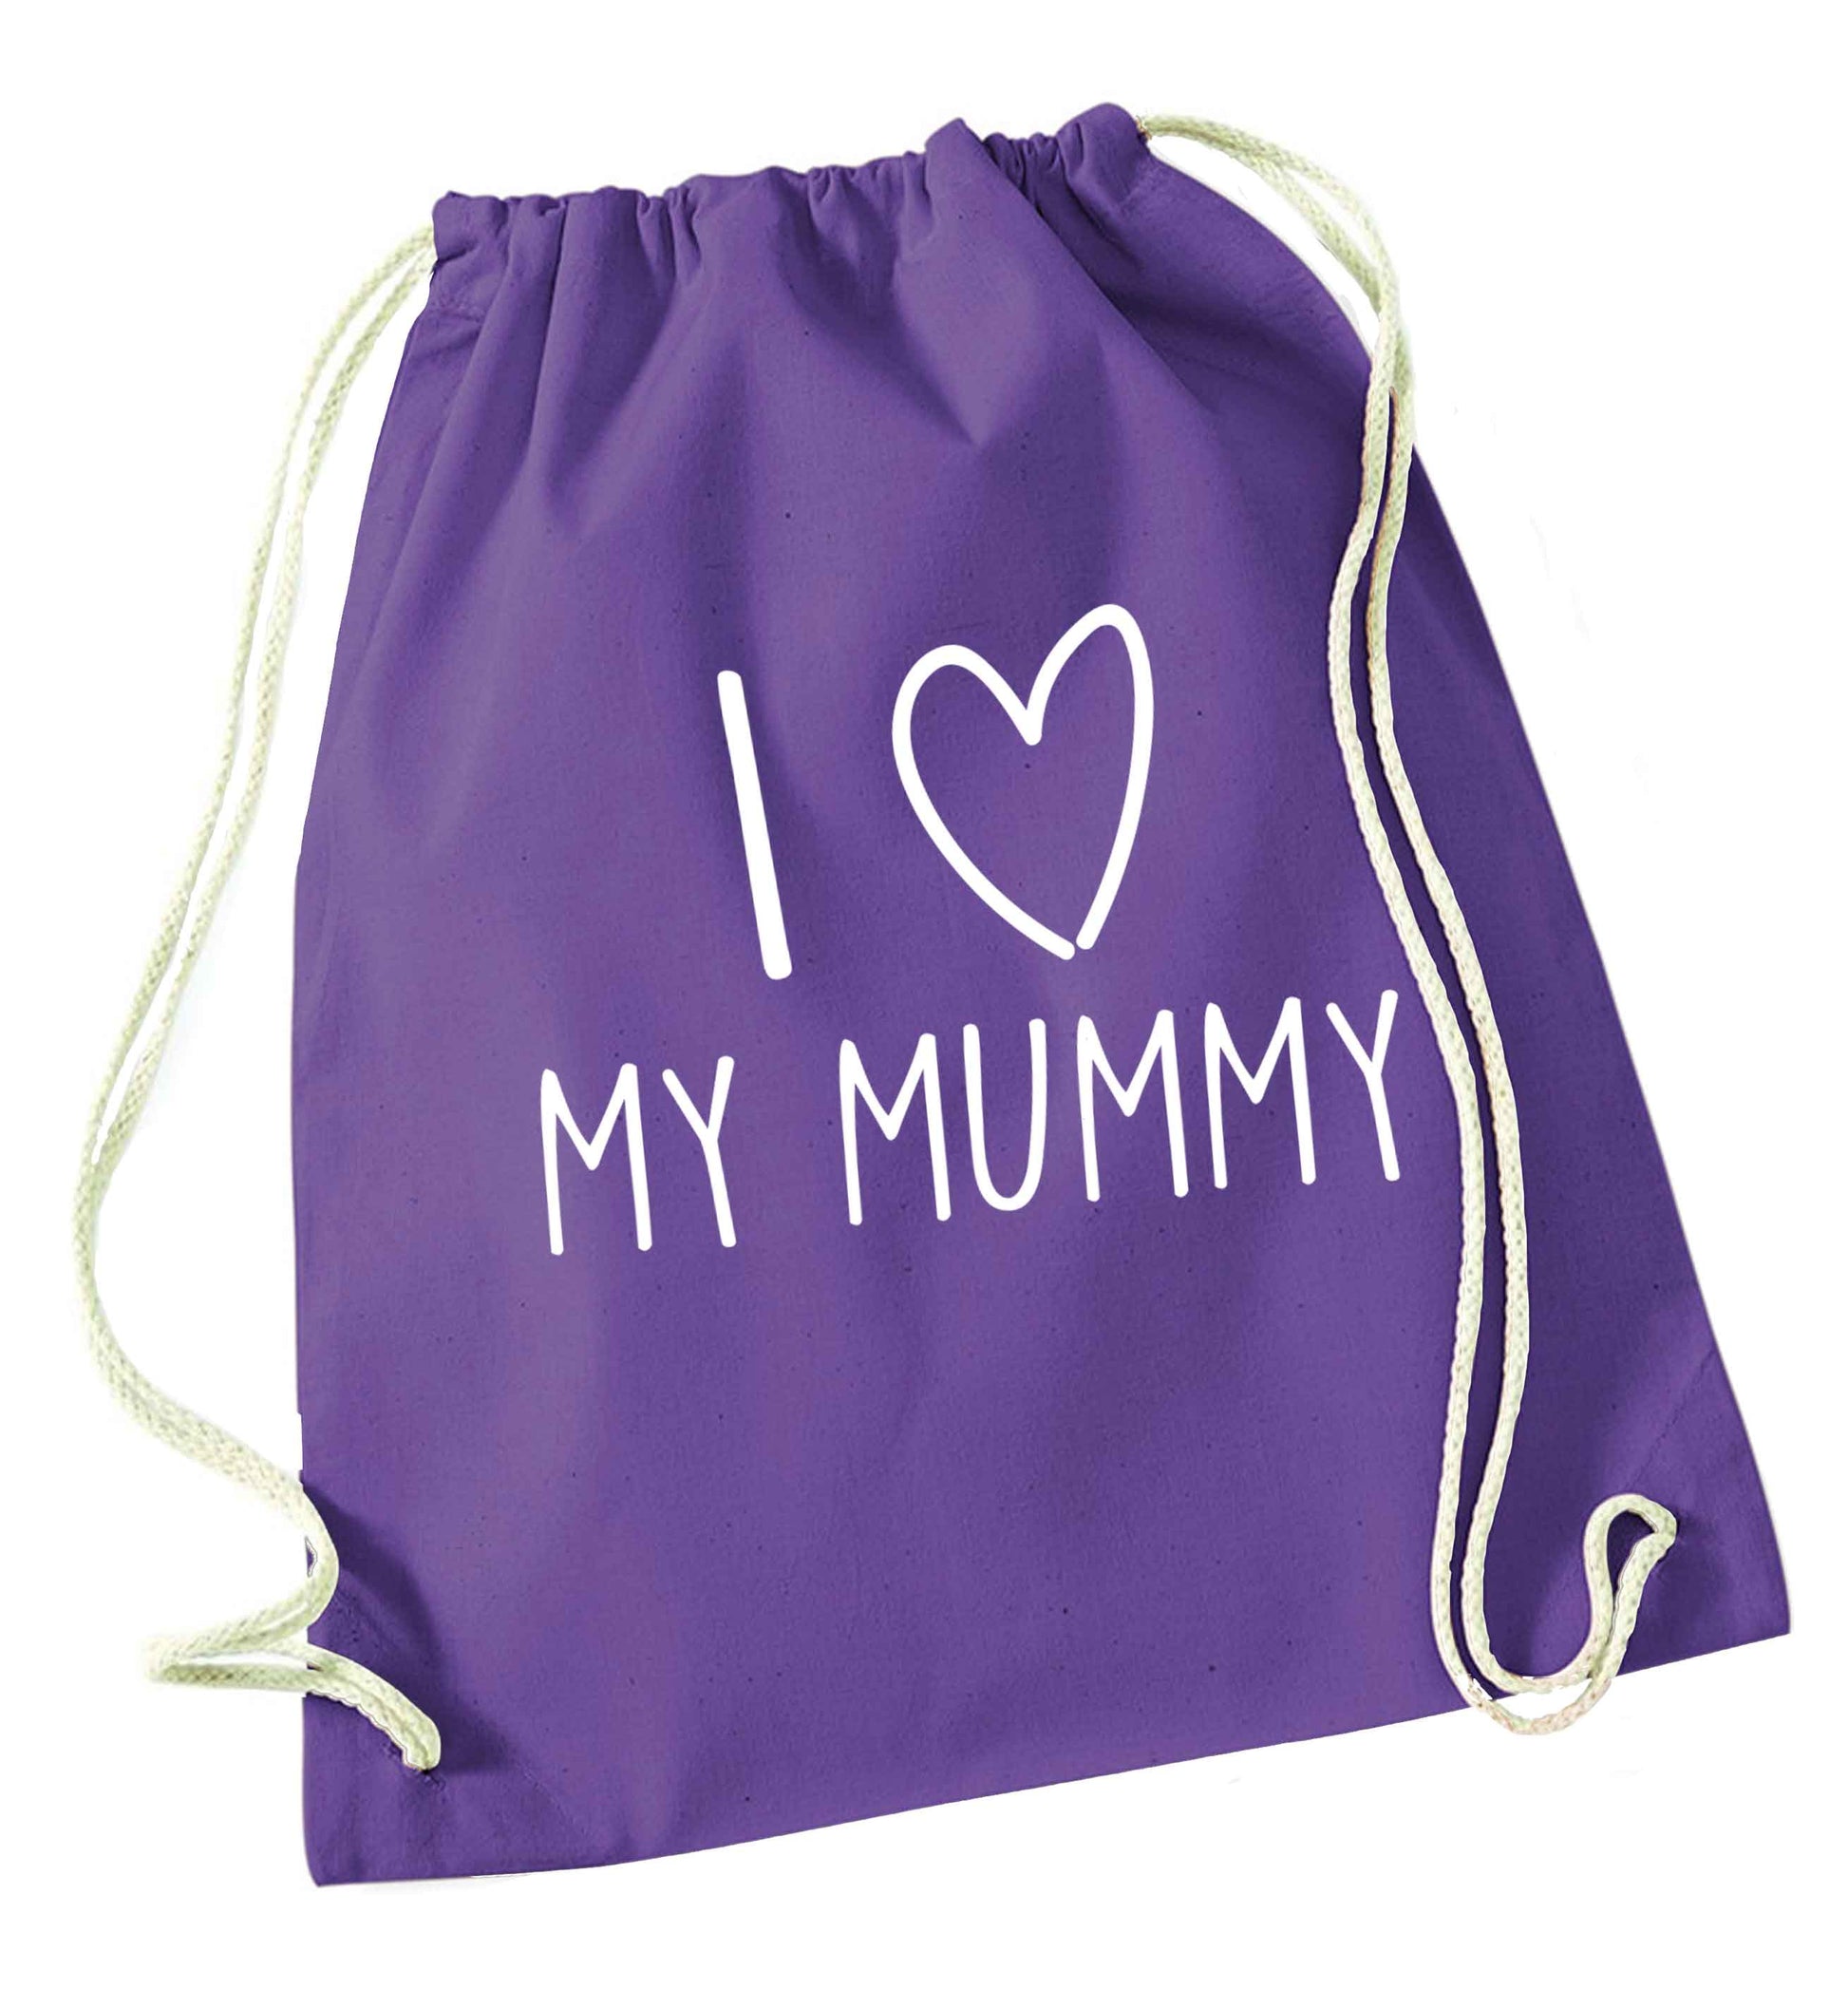 I love my mummy purple drawstring bag